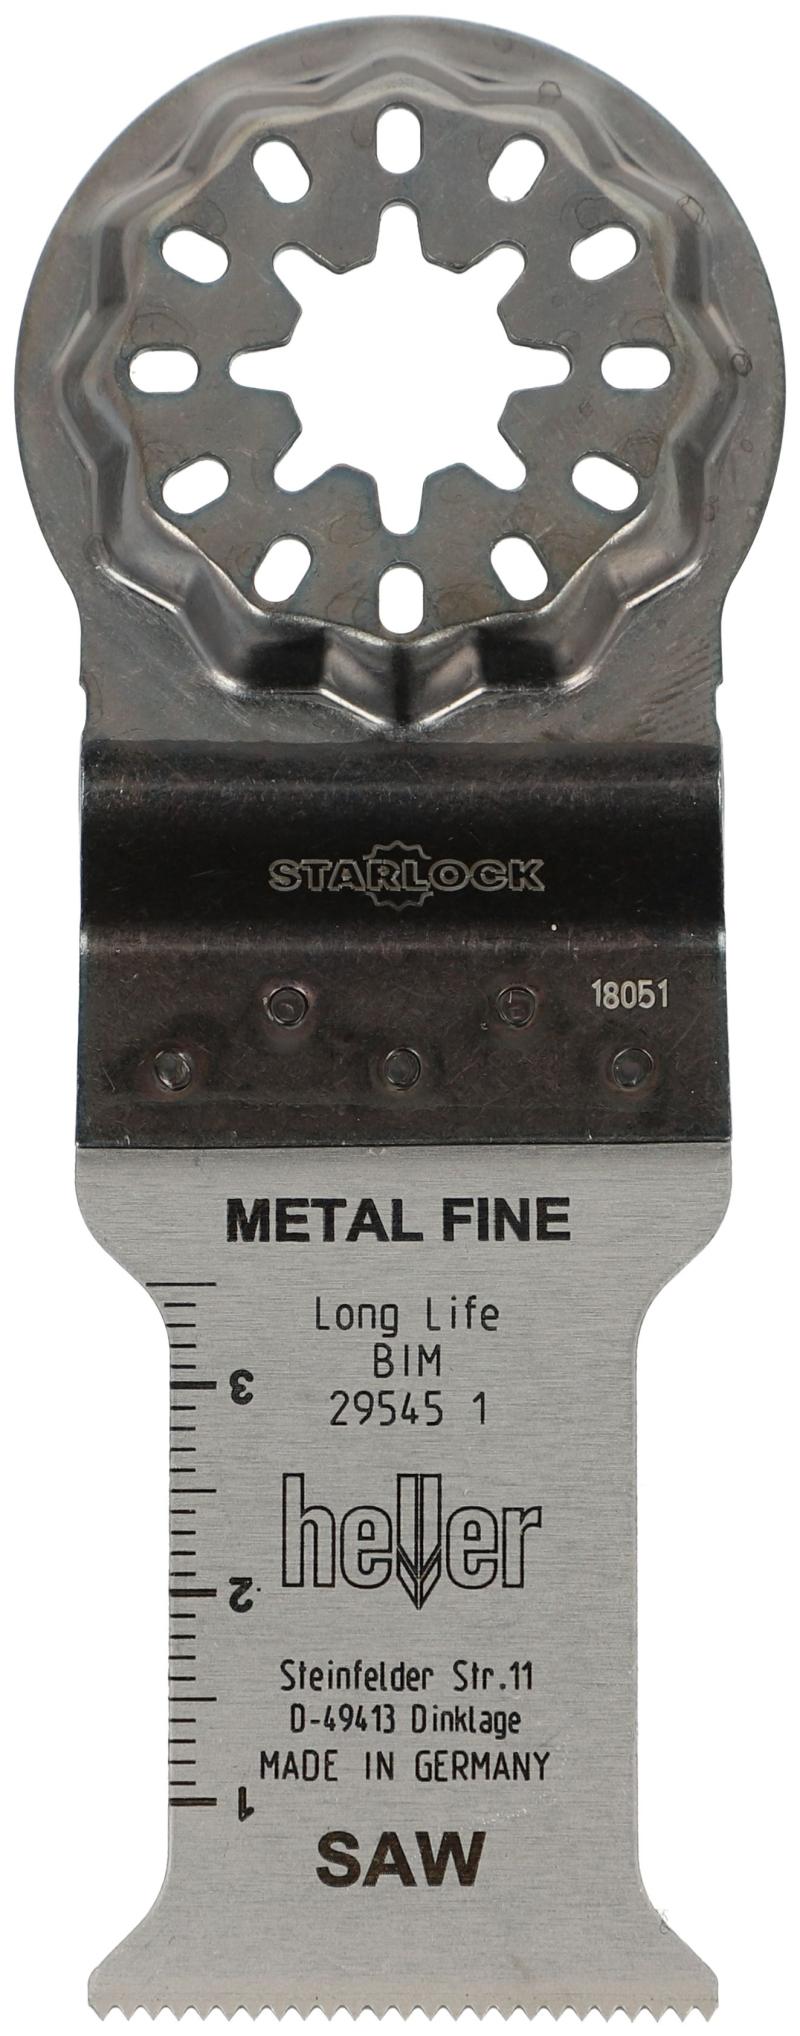 Heller starlock 30x50 mm metal fine saw